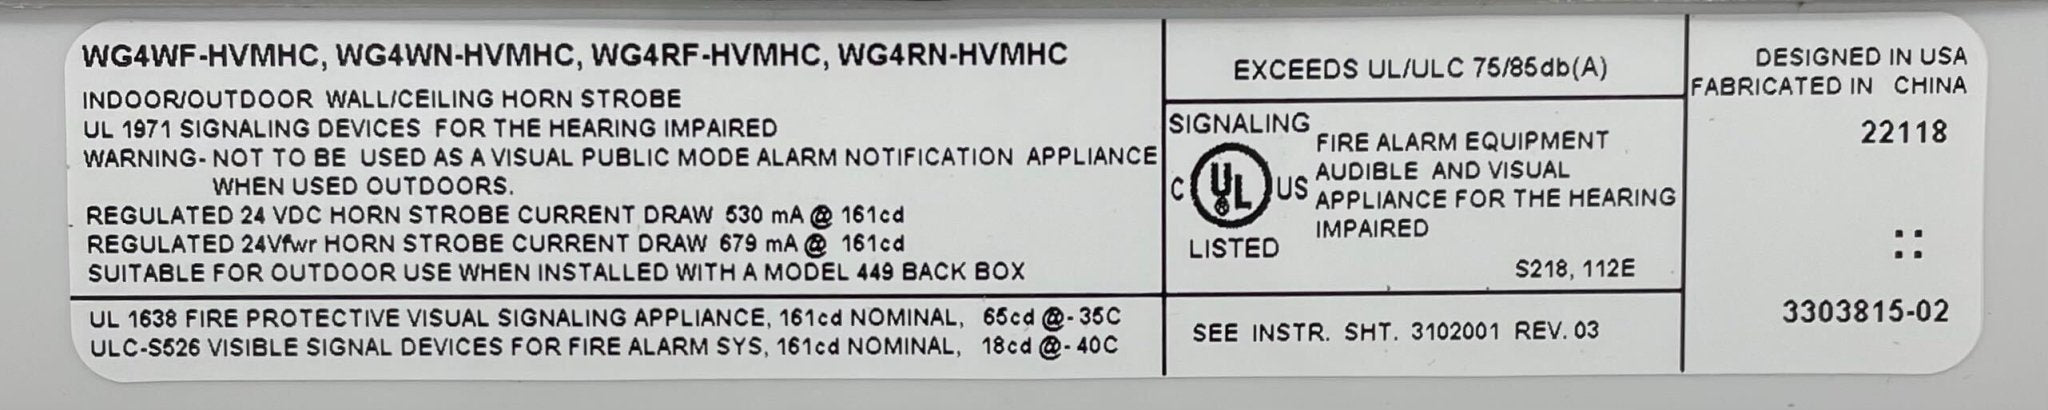 Edwards WG4RN-HVMHC - The Fire Alarm Supplier